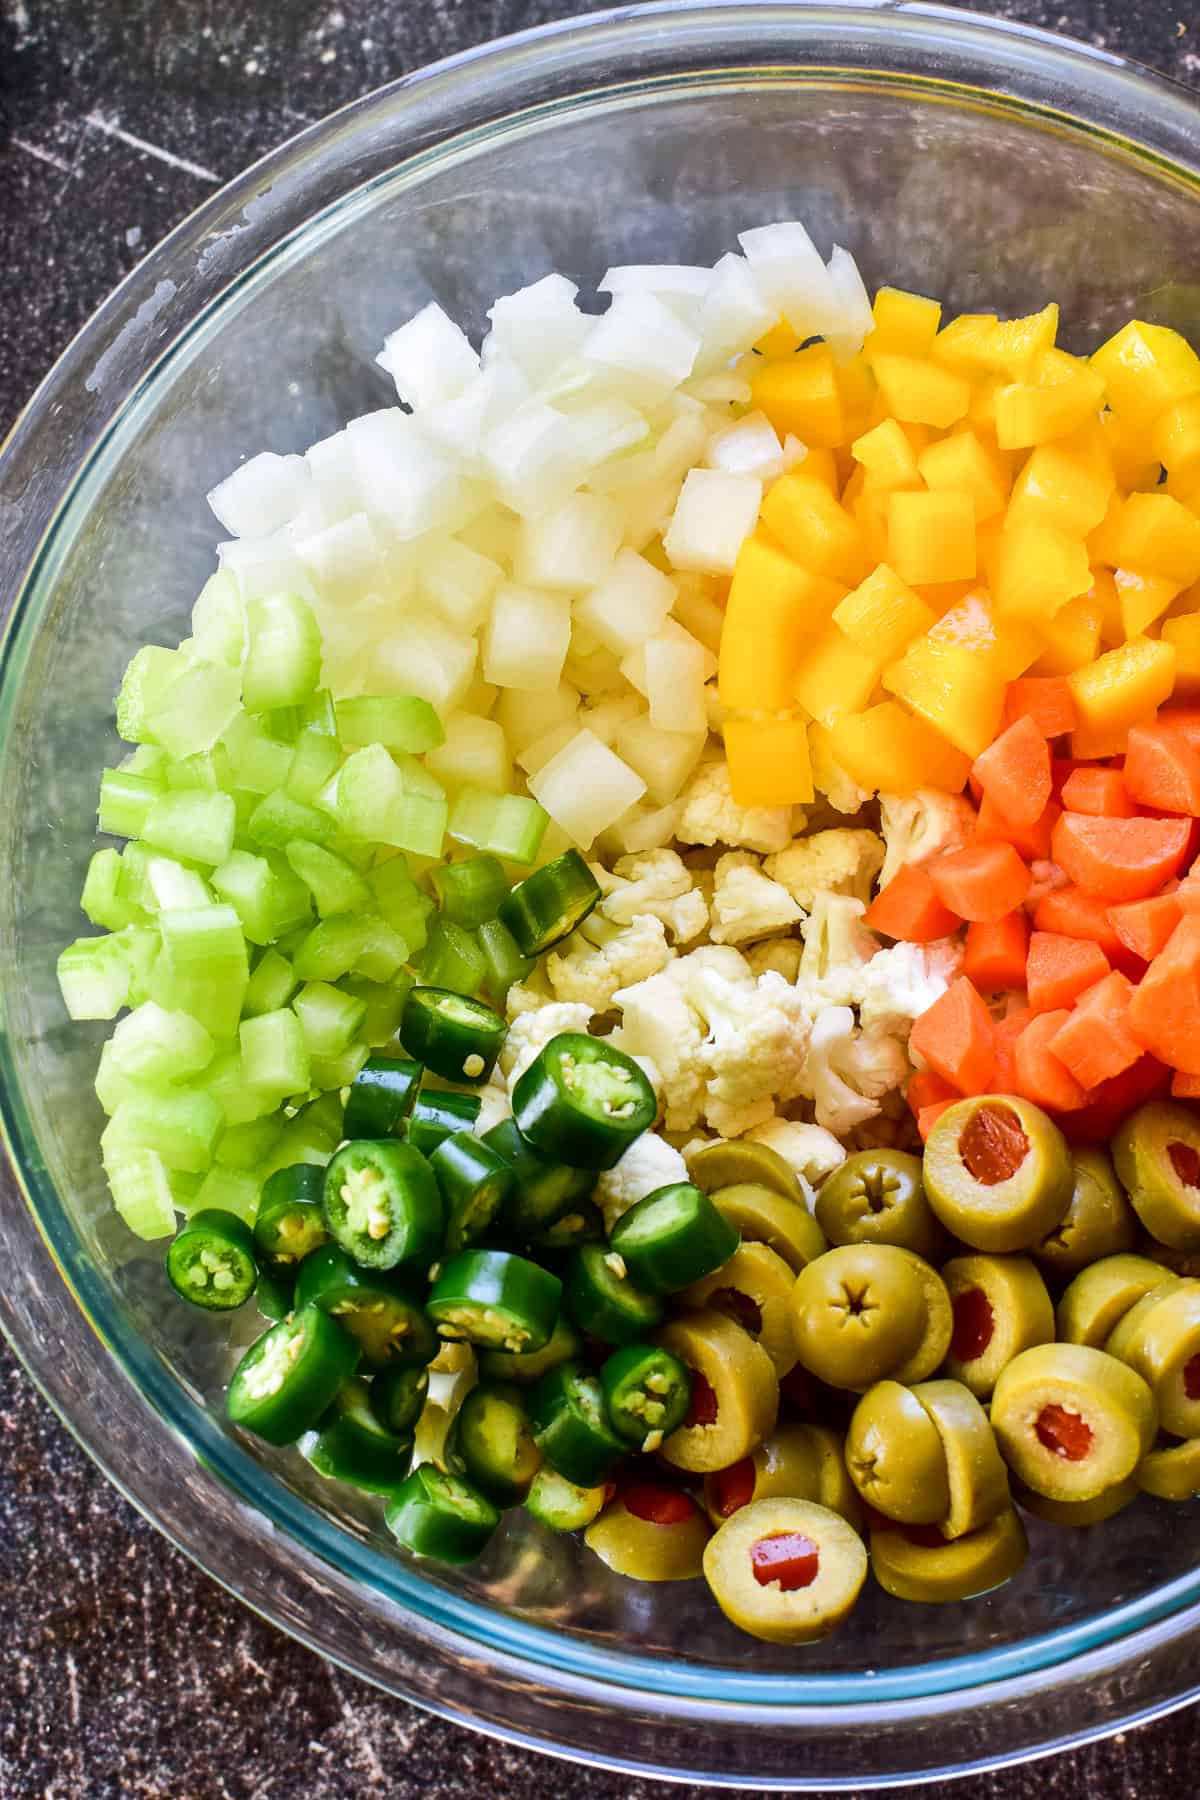 Chopped veggies in glass bowl